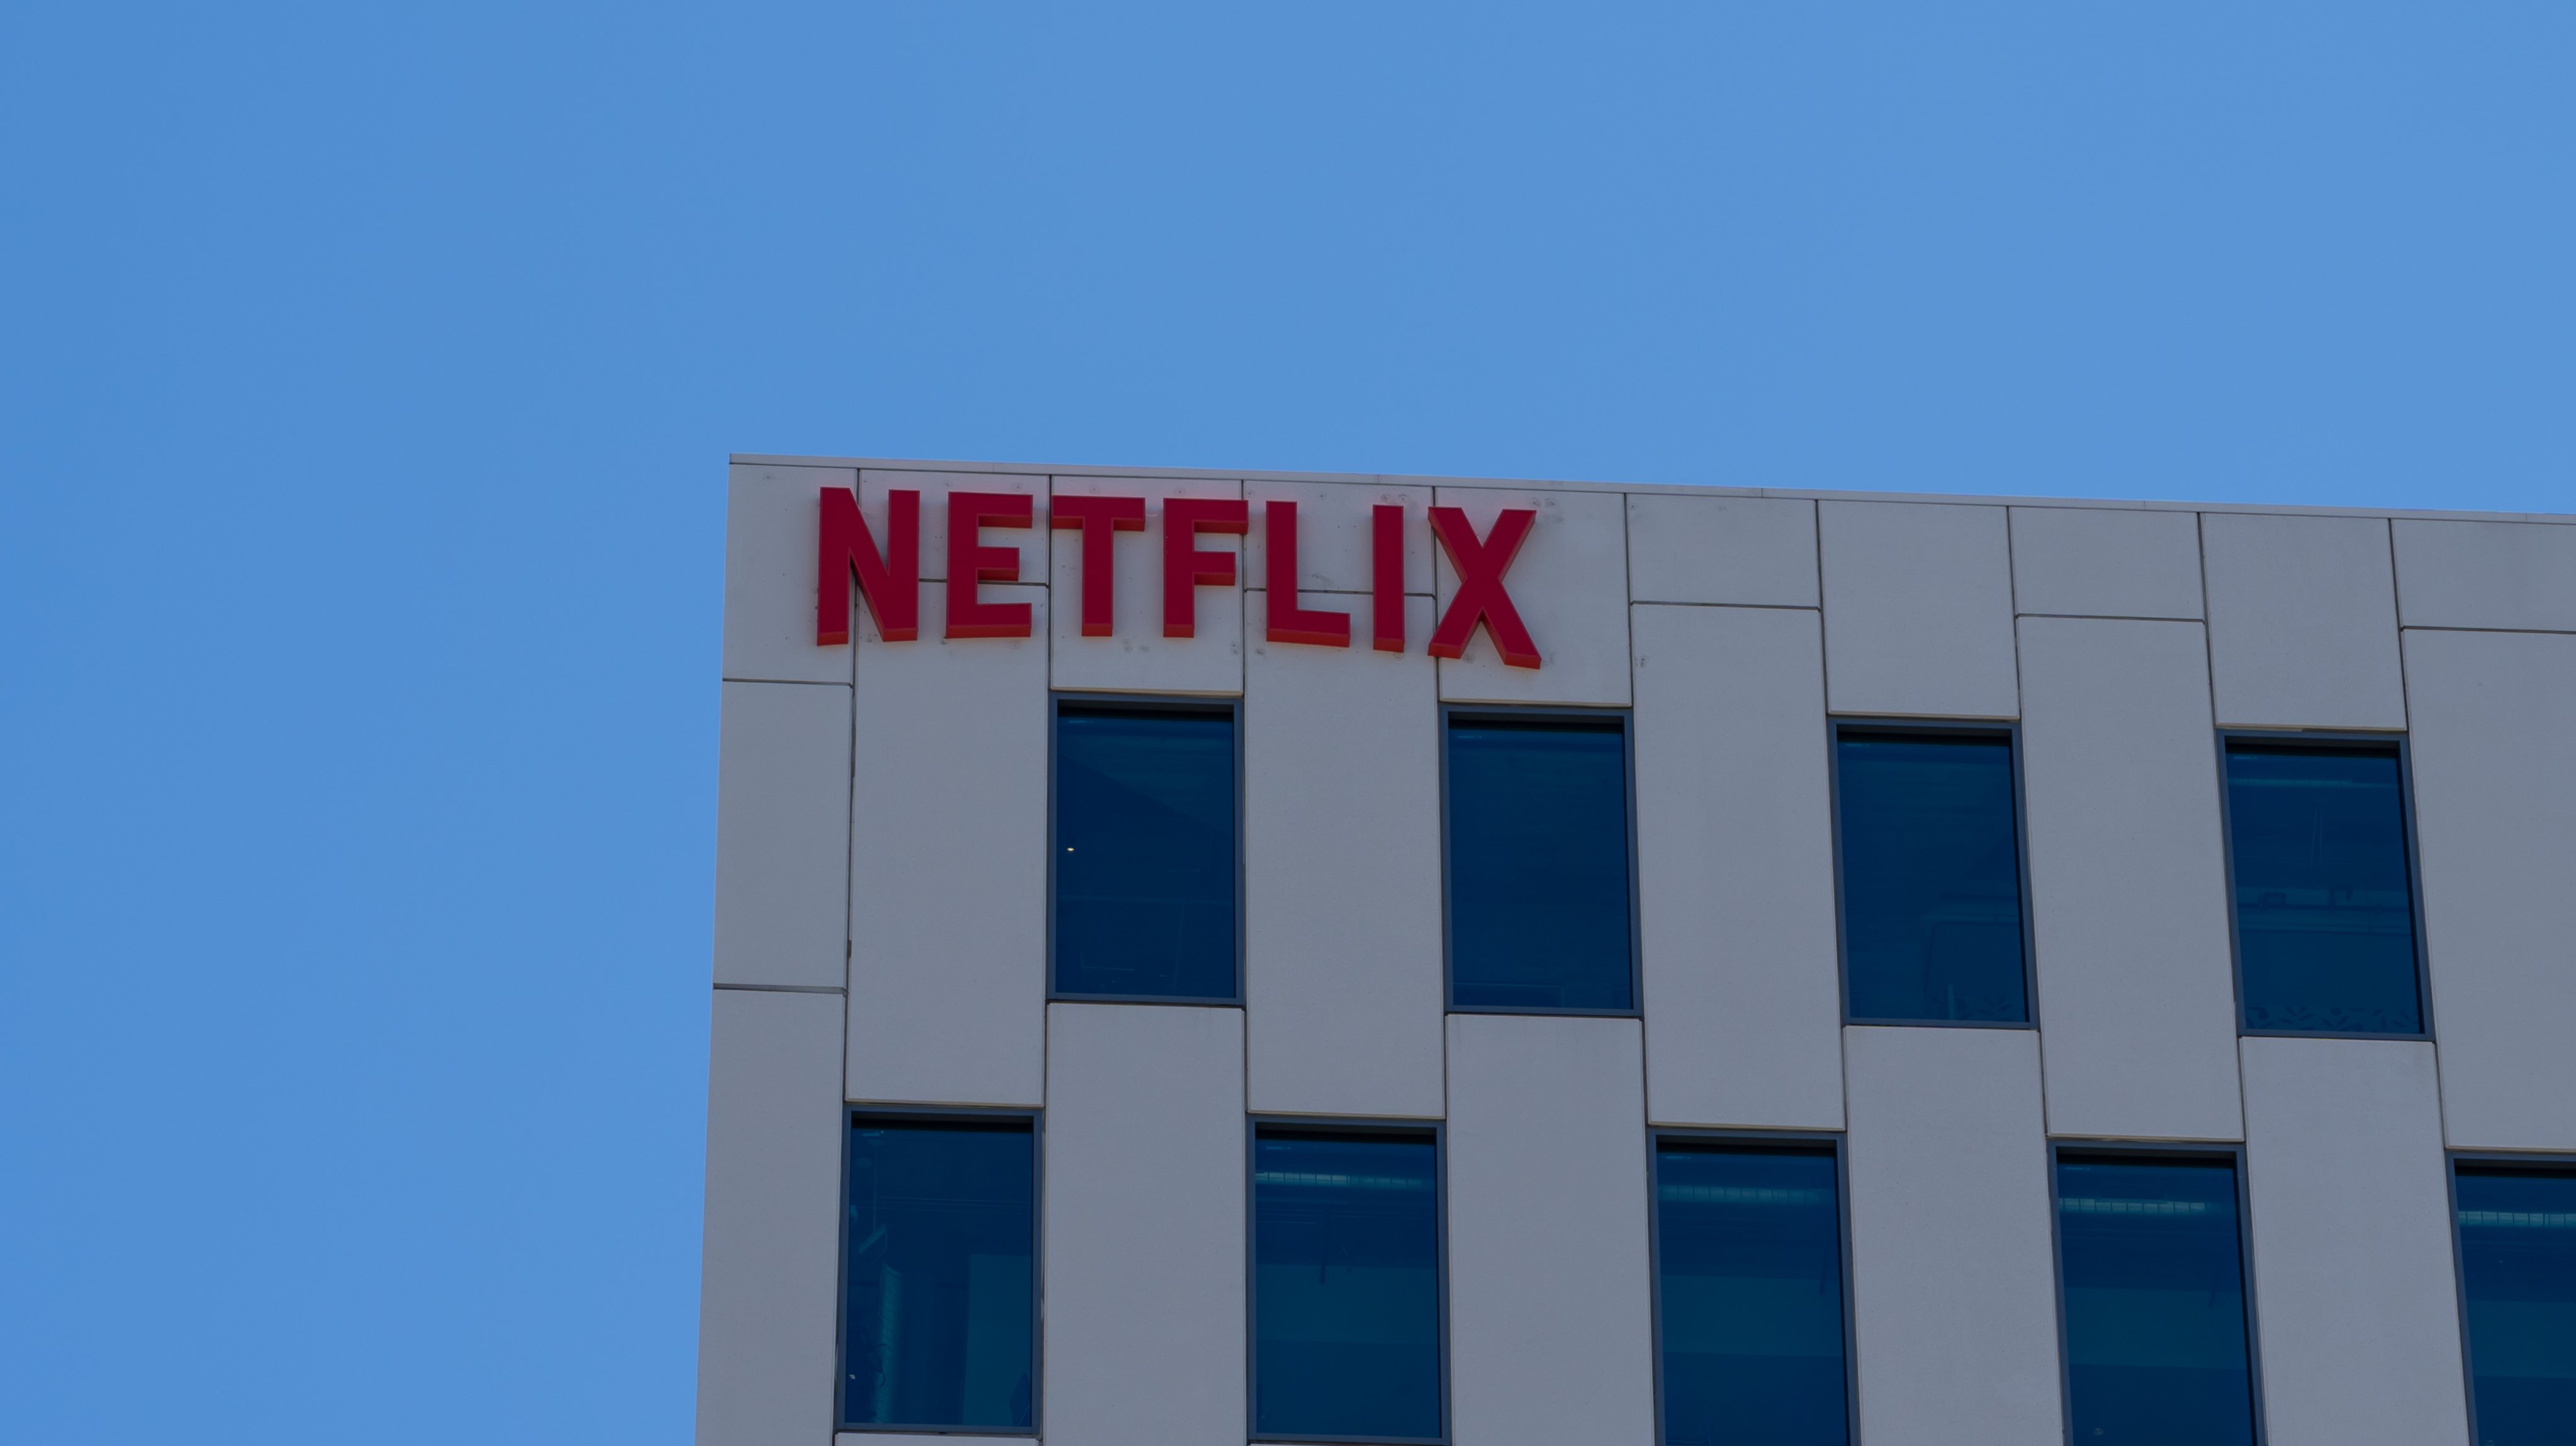 Netflix Los Angeles Headquarters building.